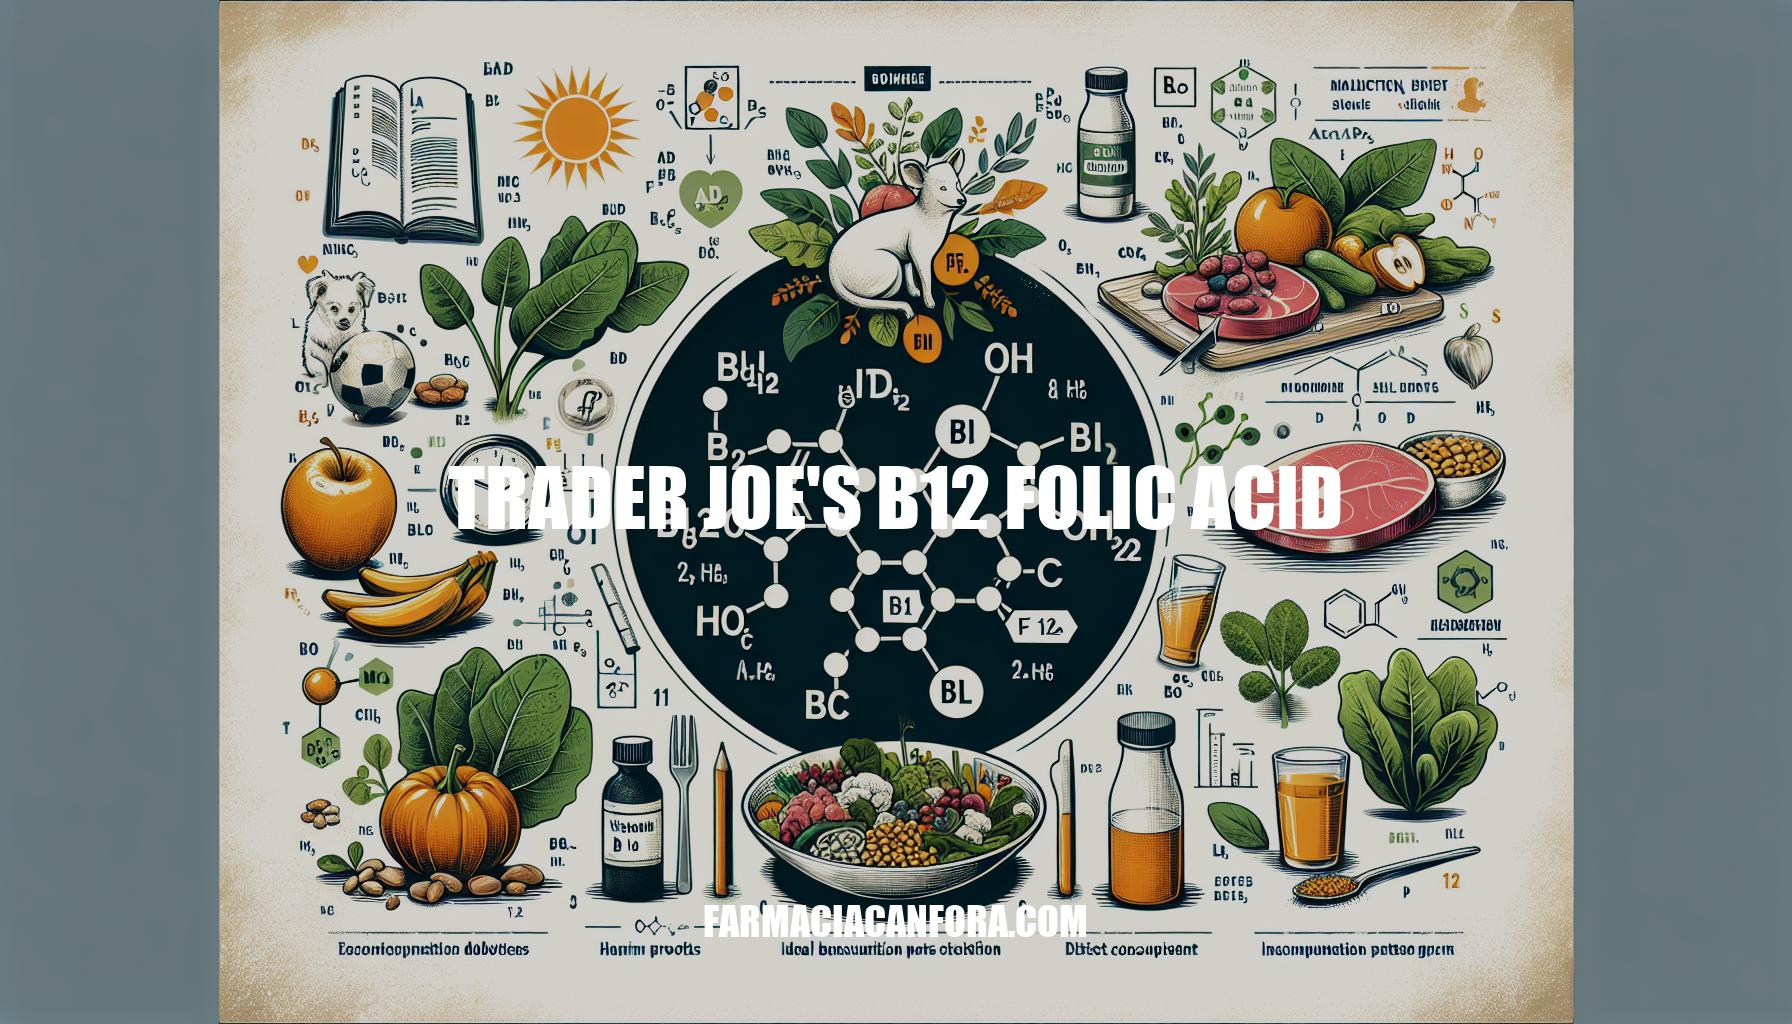 Trader Joe's B12 Folic Acid Guide